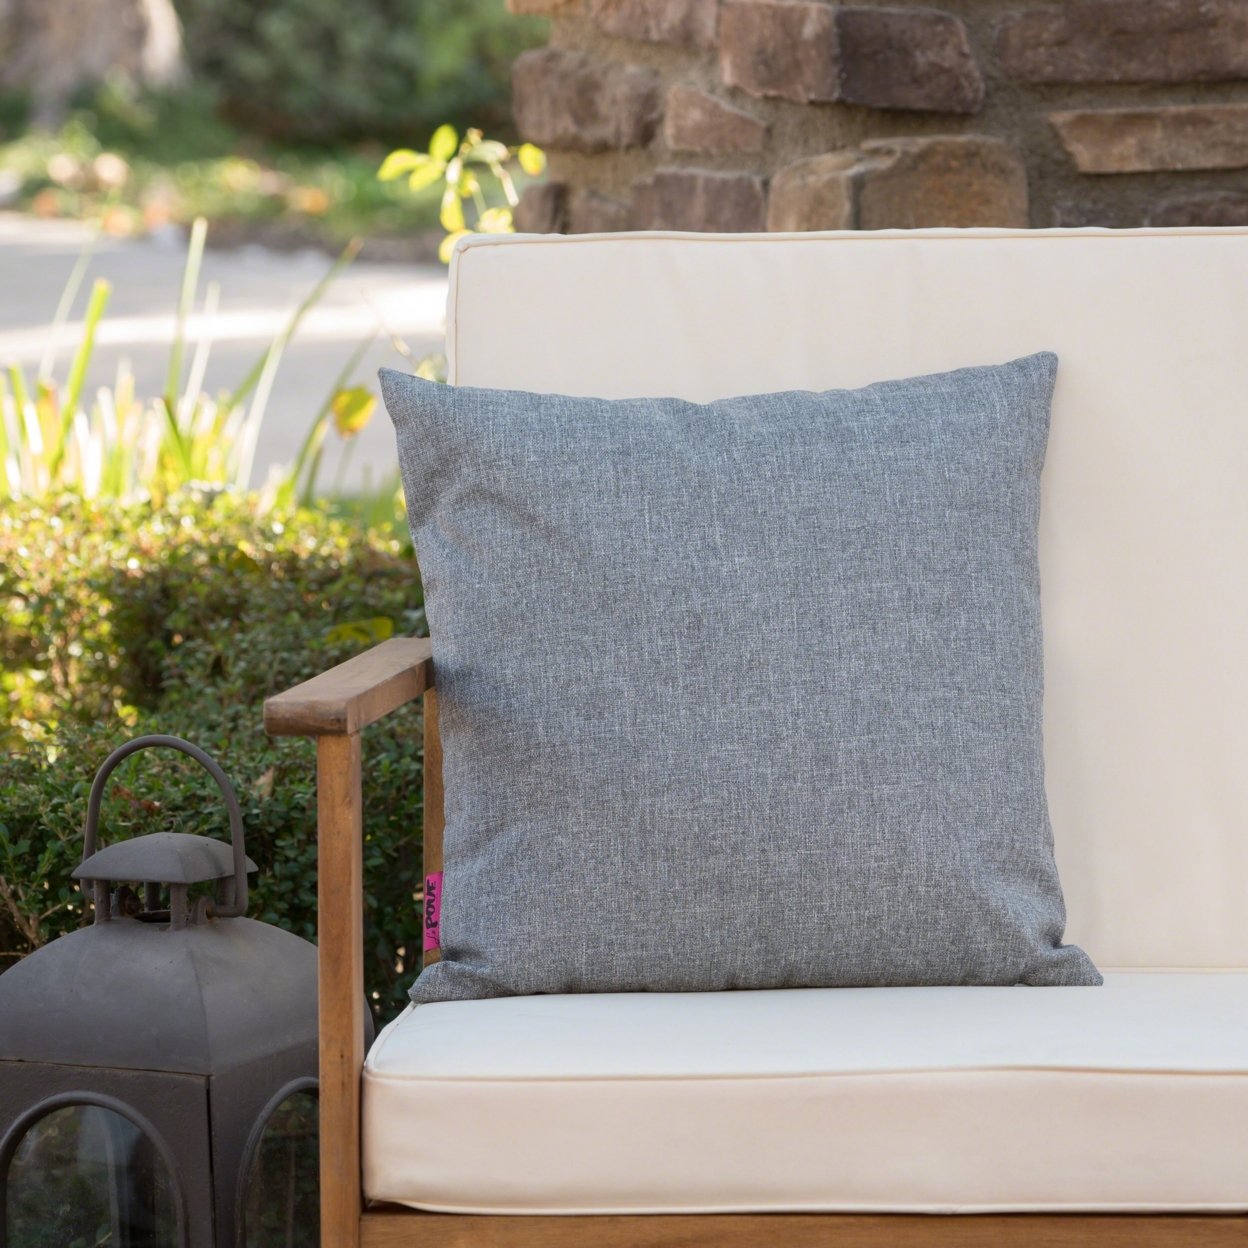 Coronado Outdoor Water Resistant Square Throw Pillow - Gray, Single